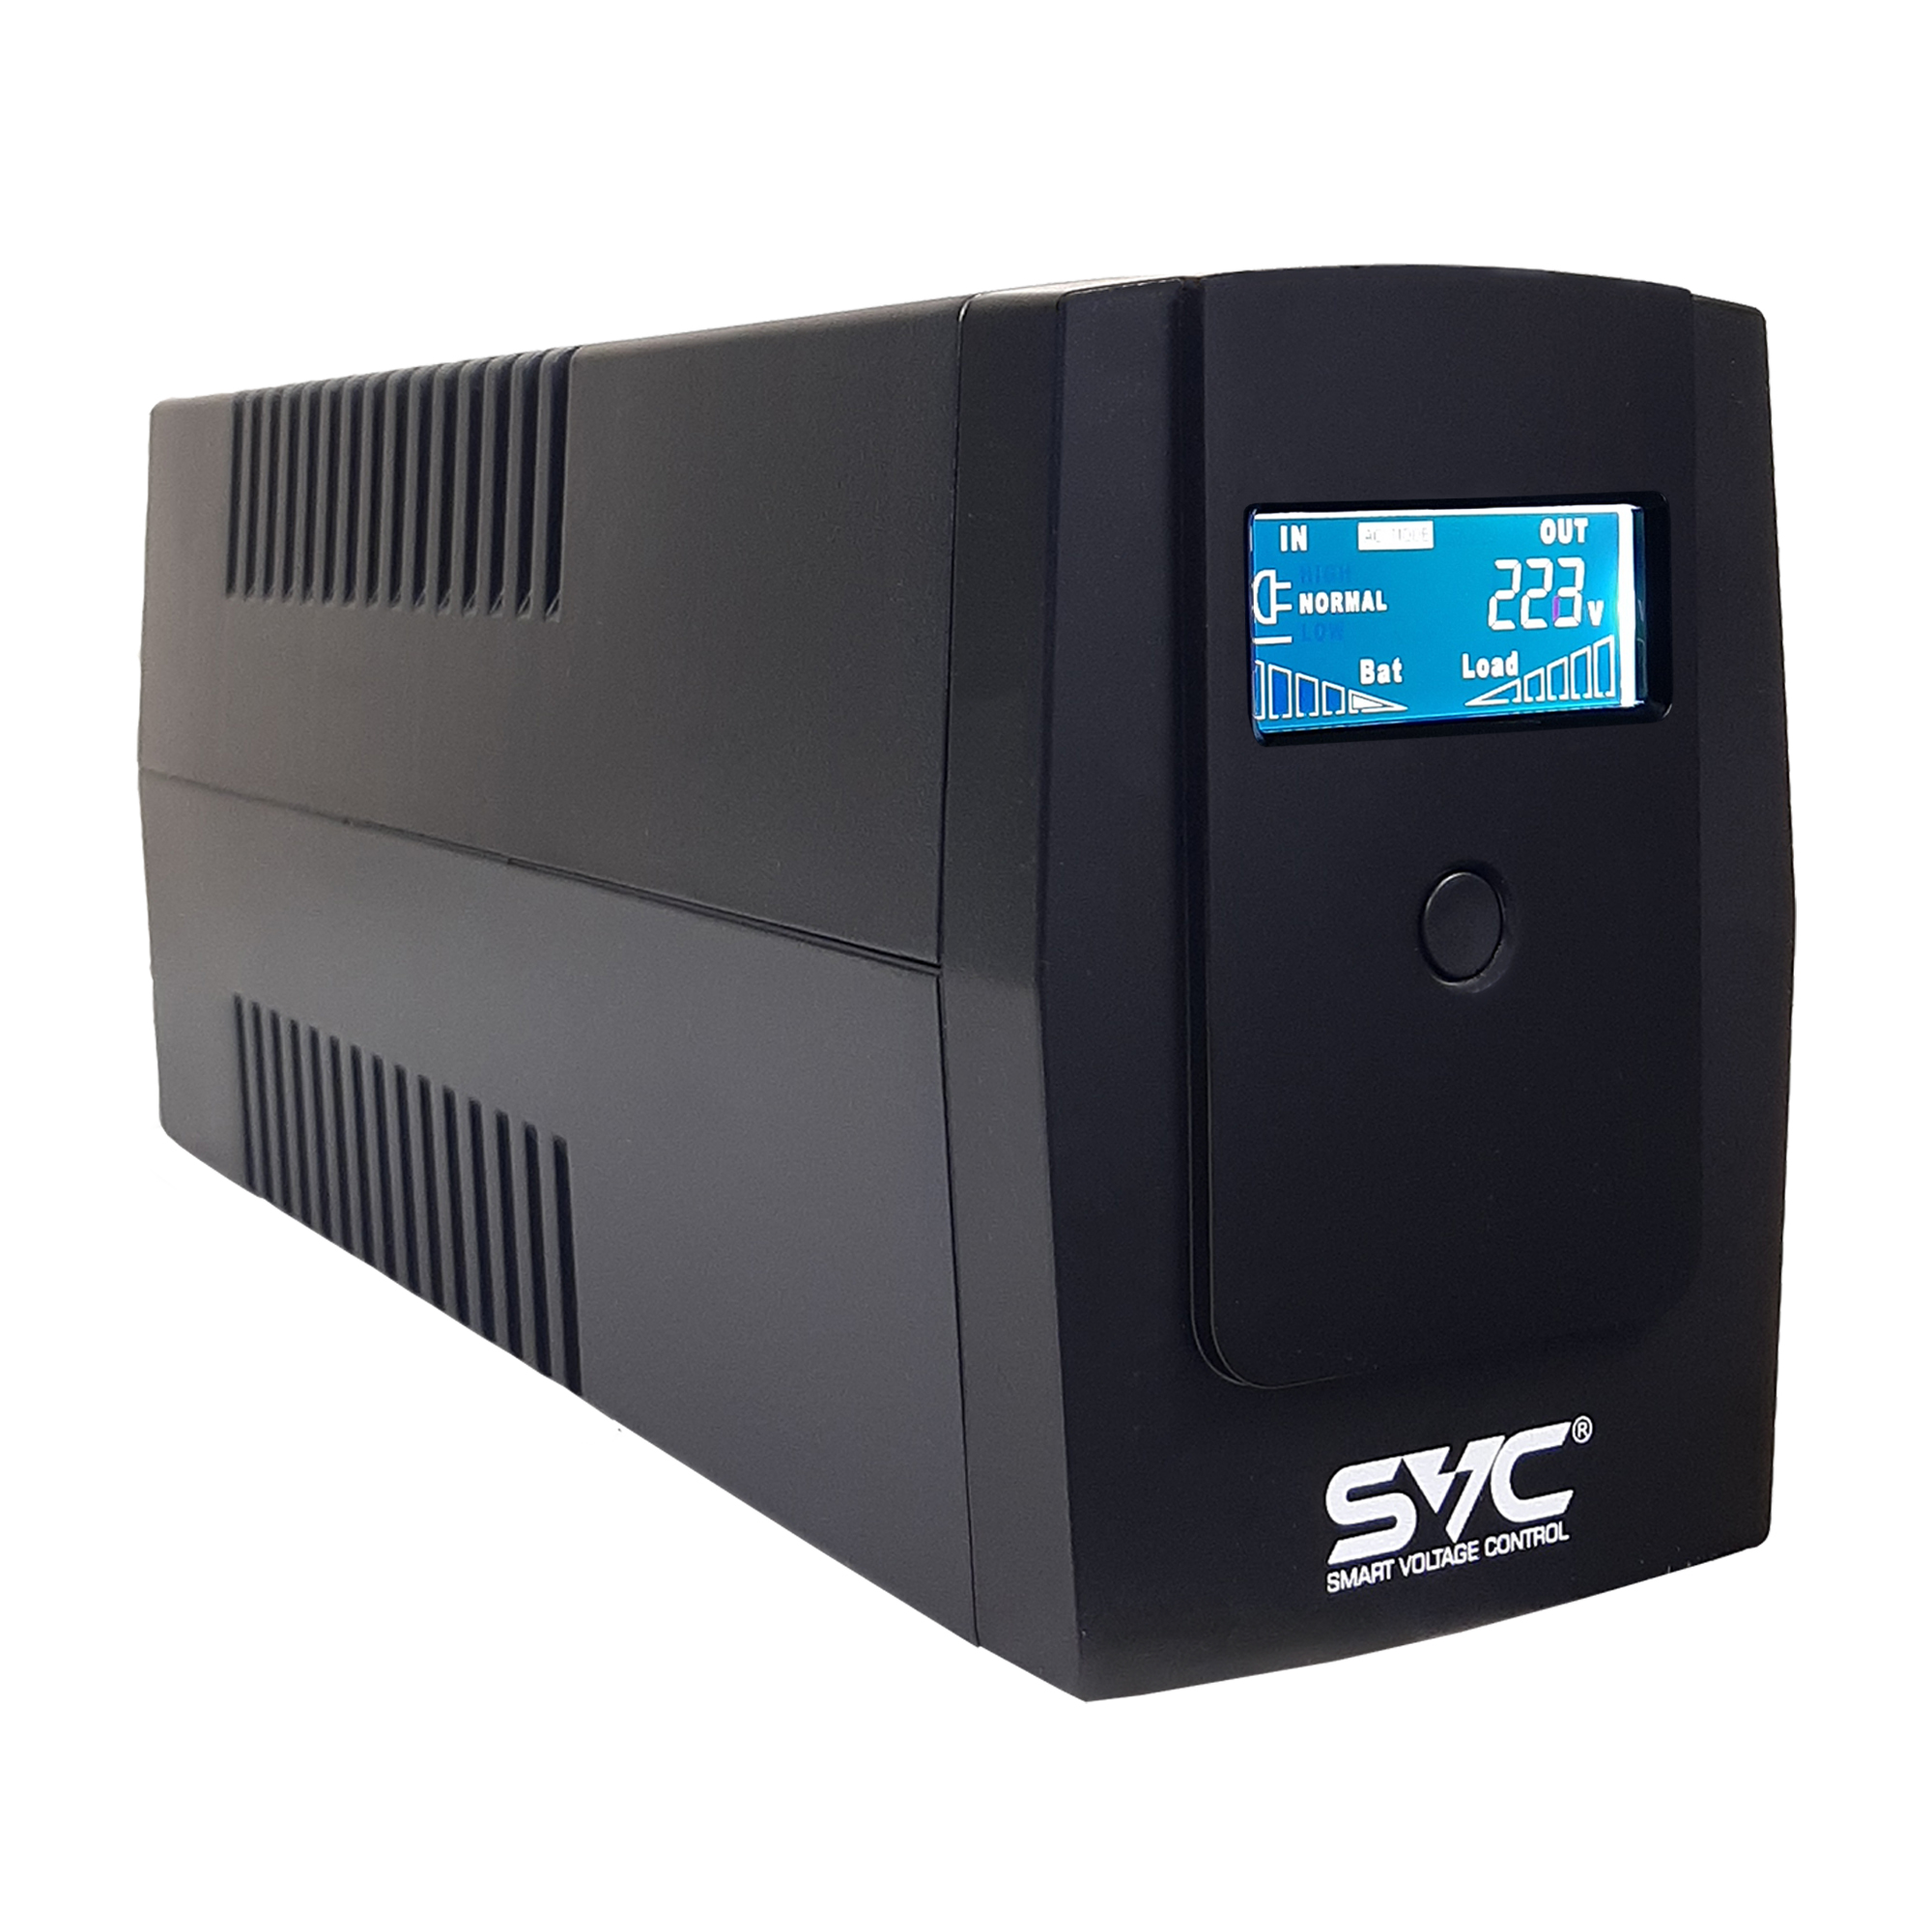 ИБП SVC V-800-R-LCD, 800 VA, 480 Вт, EURO, розеток - 2, USB, черный (V-800-R-LCD)